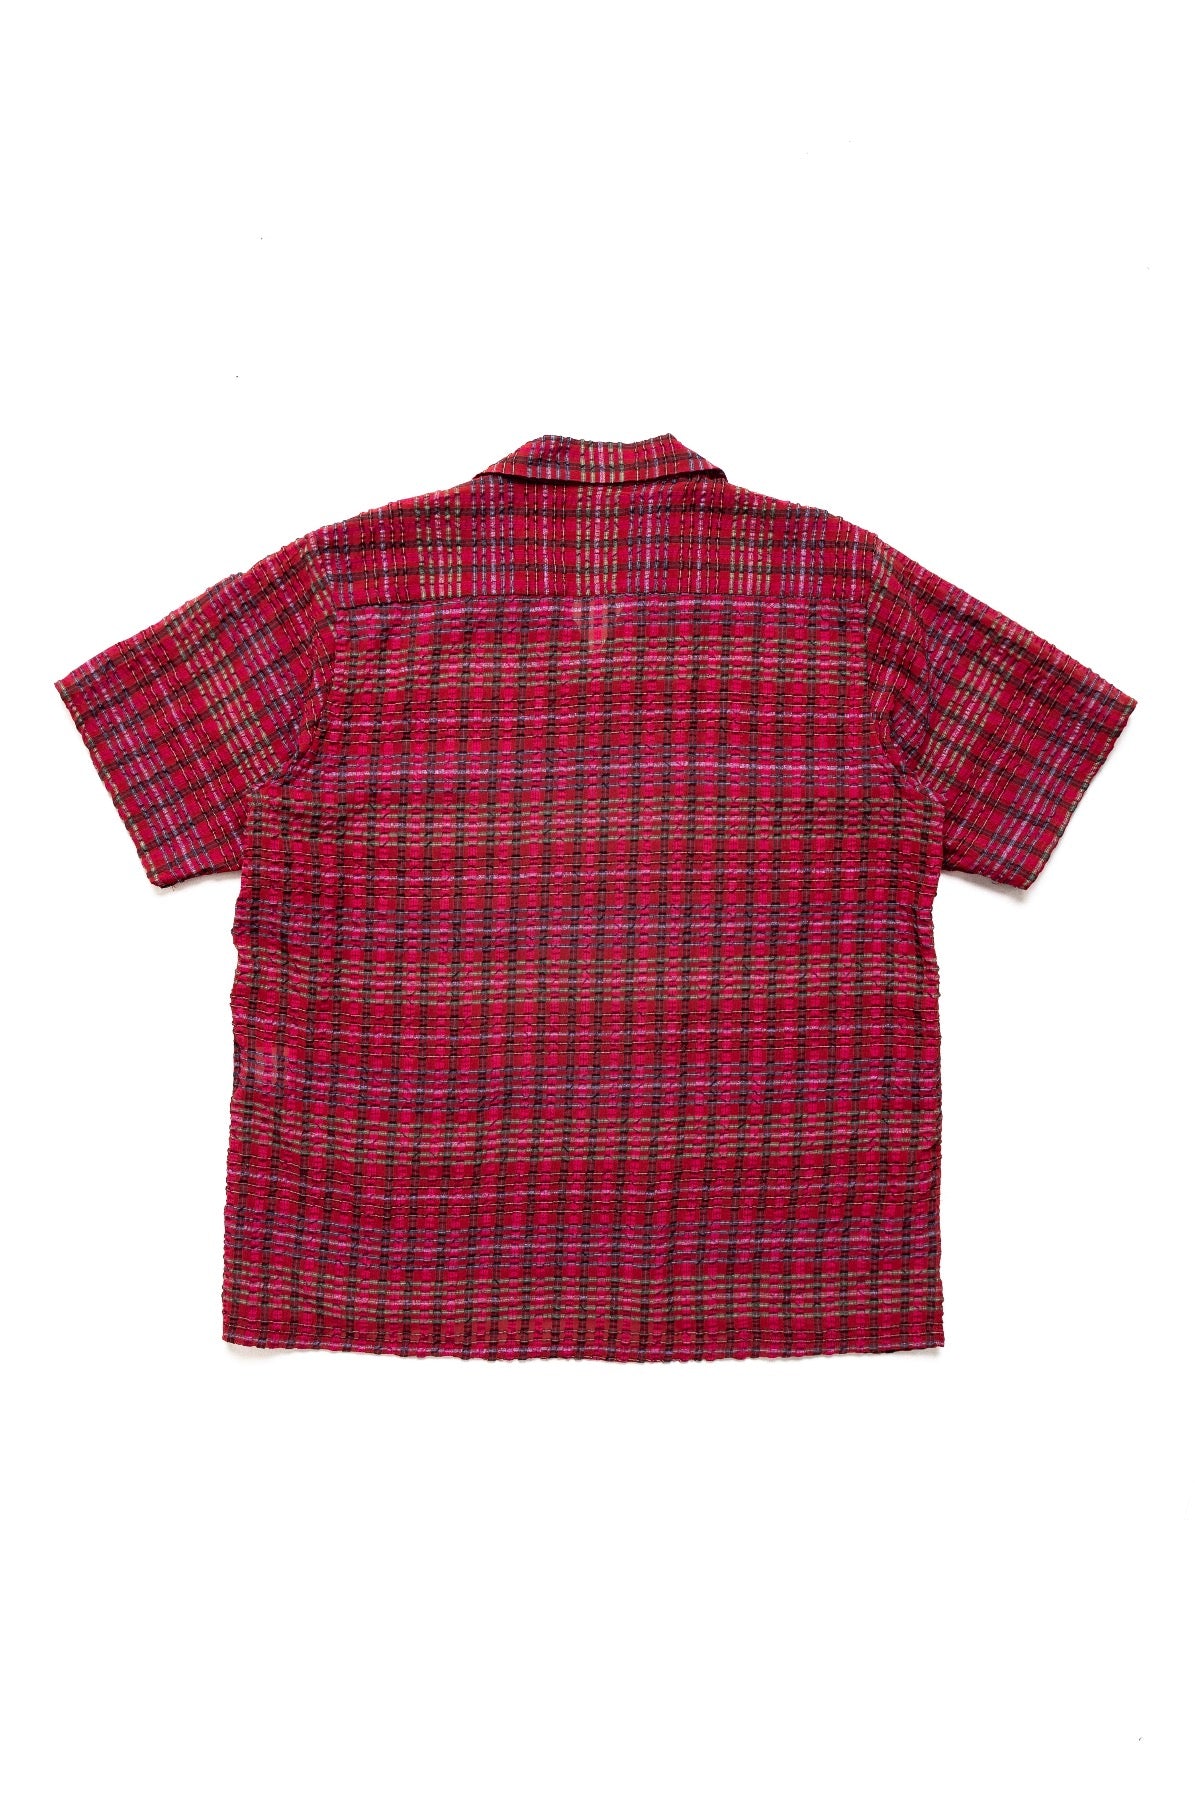 S/S One-Up Shirt PE/R Chiffon Sucker Plaid - Red